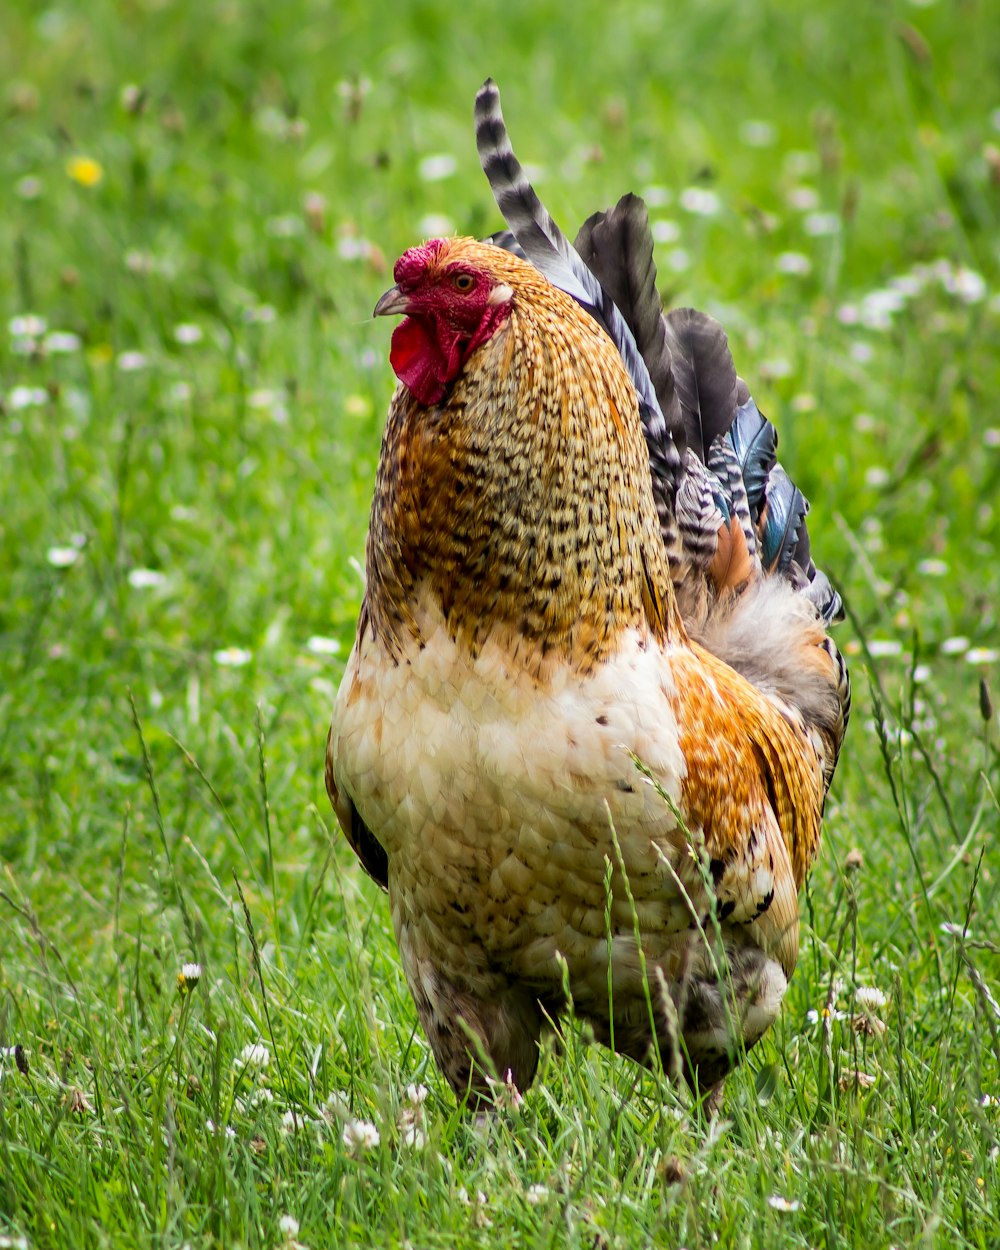 a rooster walking through a field of green grass